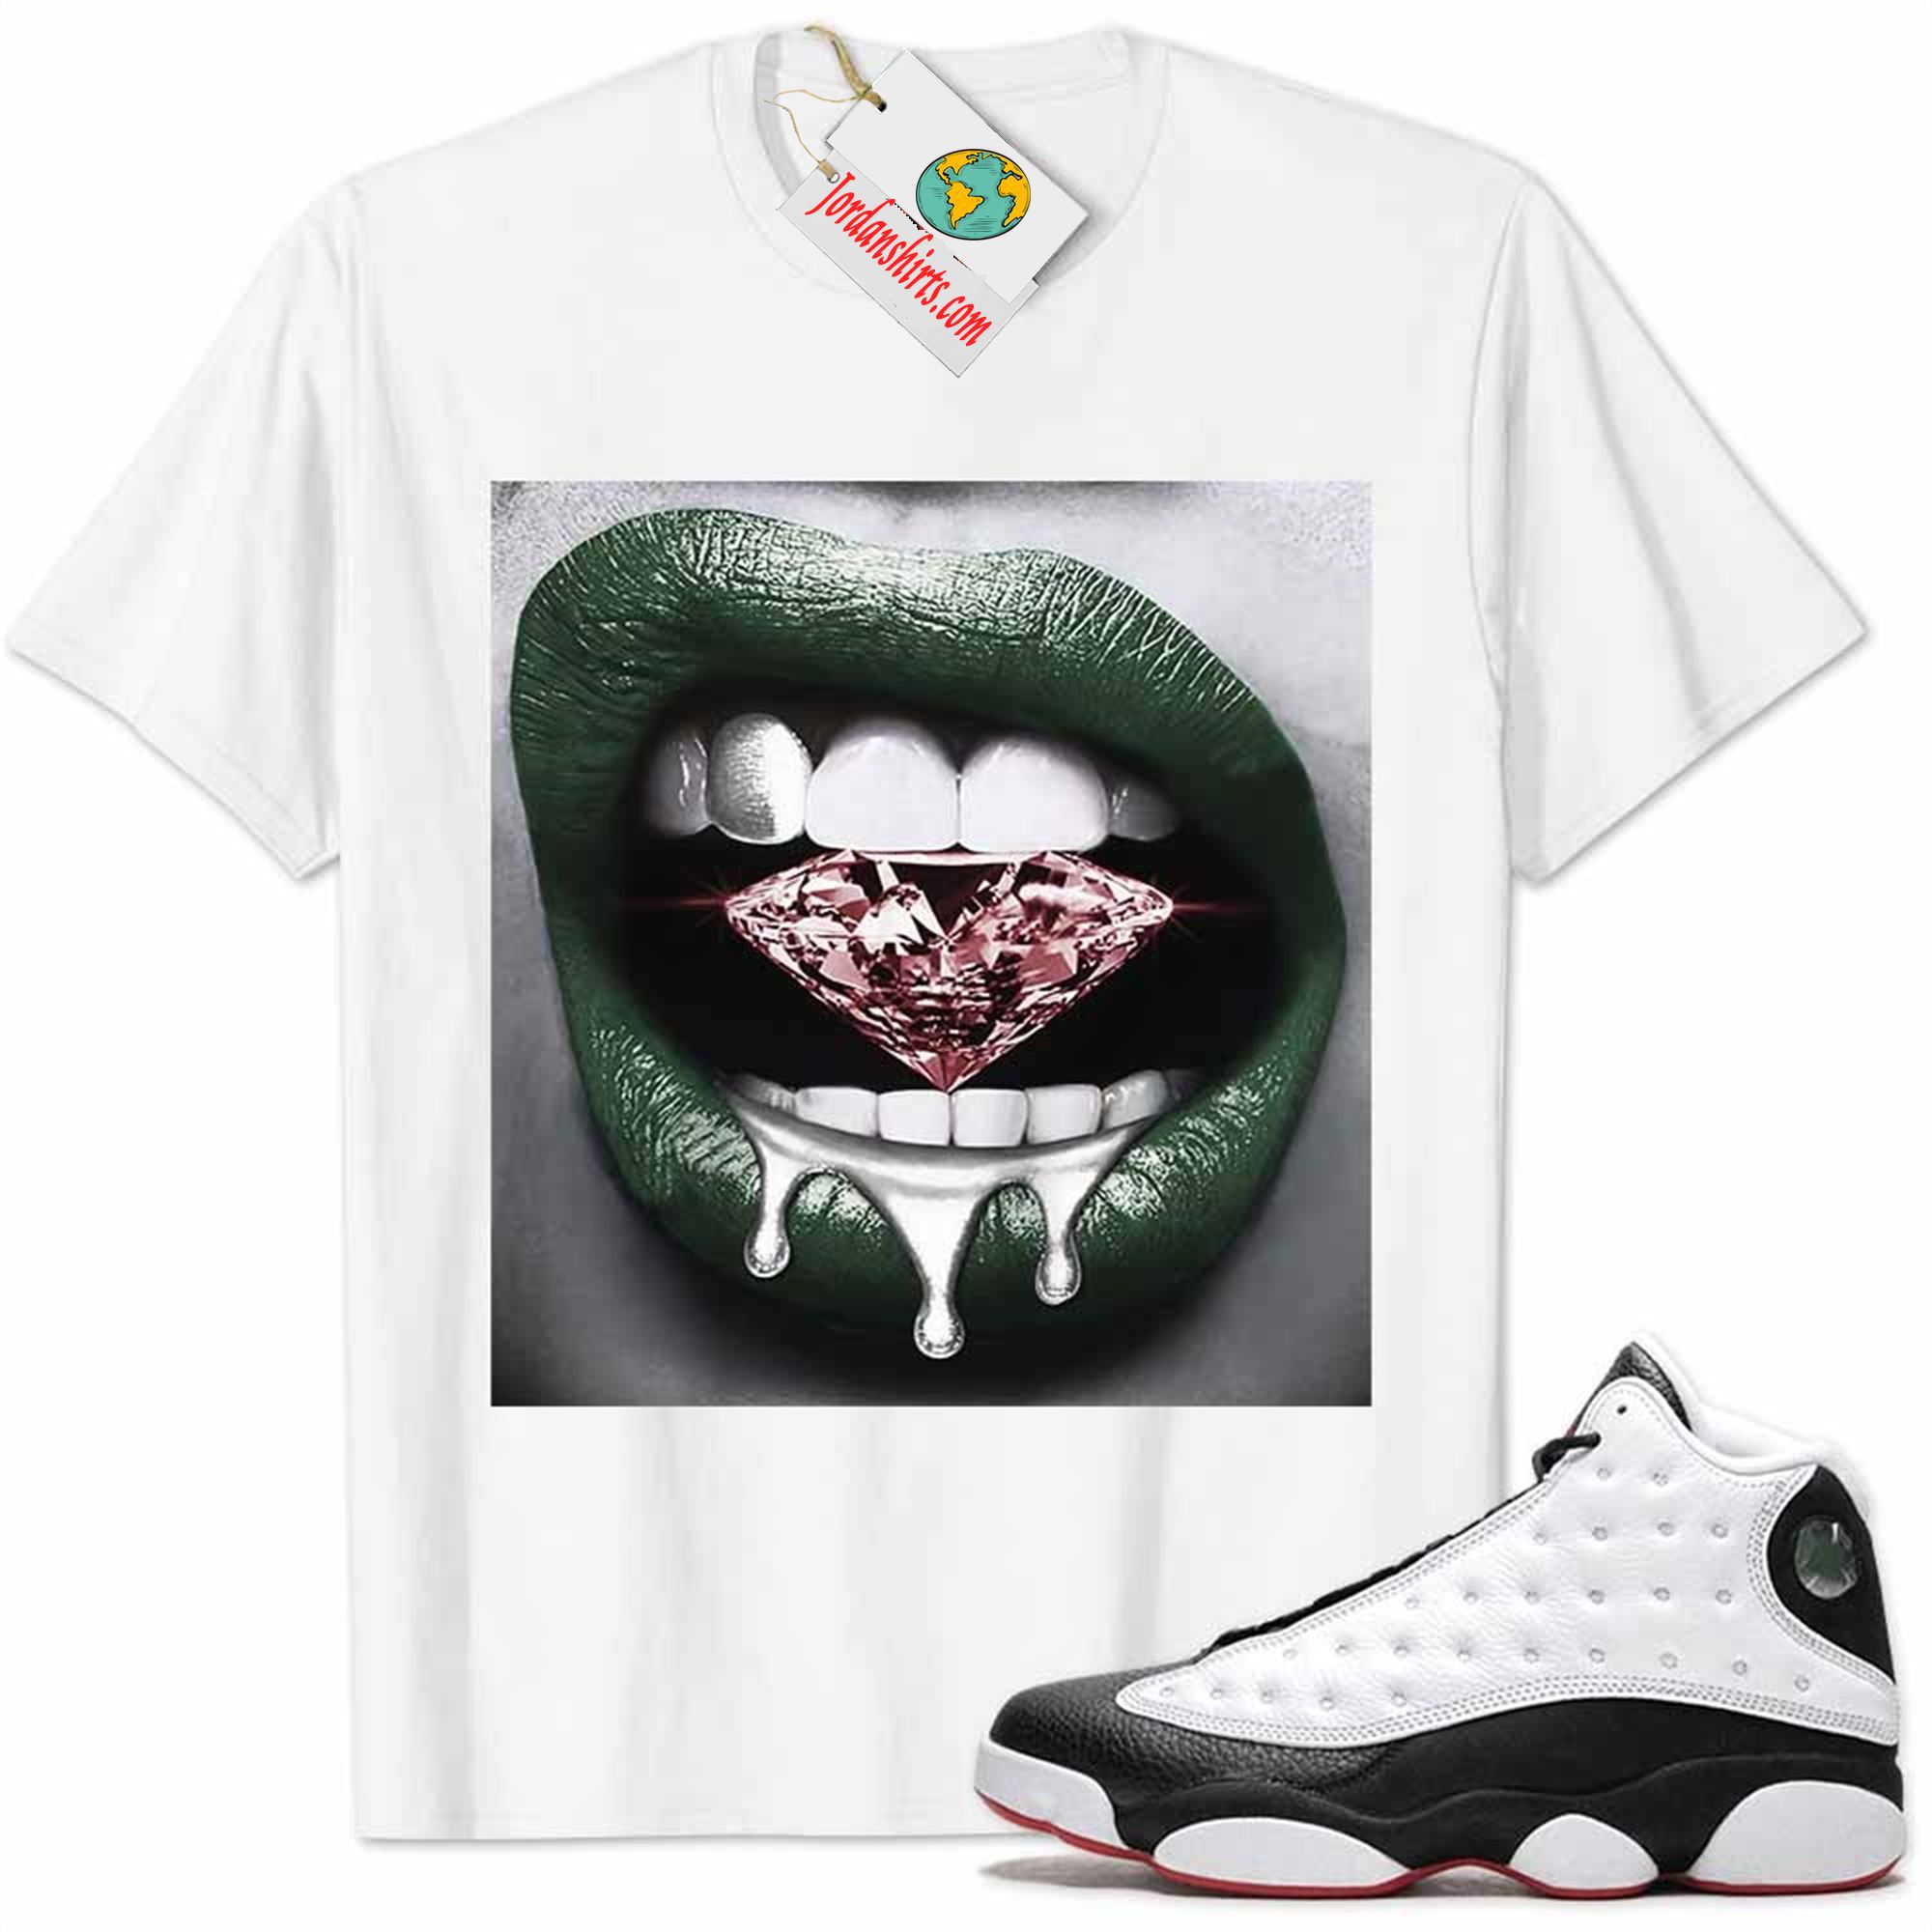 Jordan 13 Shirt, Jordan 13 He Got Game Shirt Sexy Lip Bite Diamond Dripping White Full Size Up To 5xl